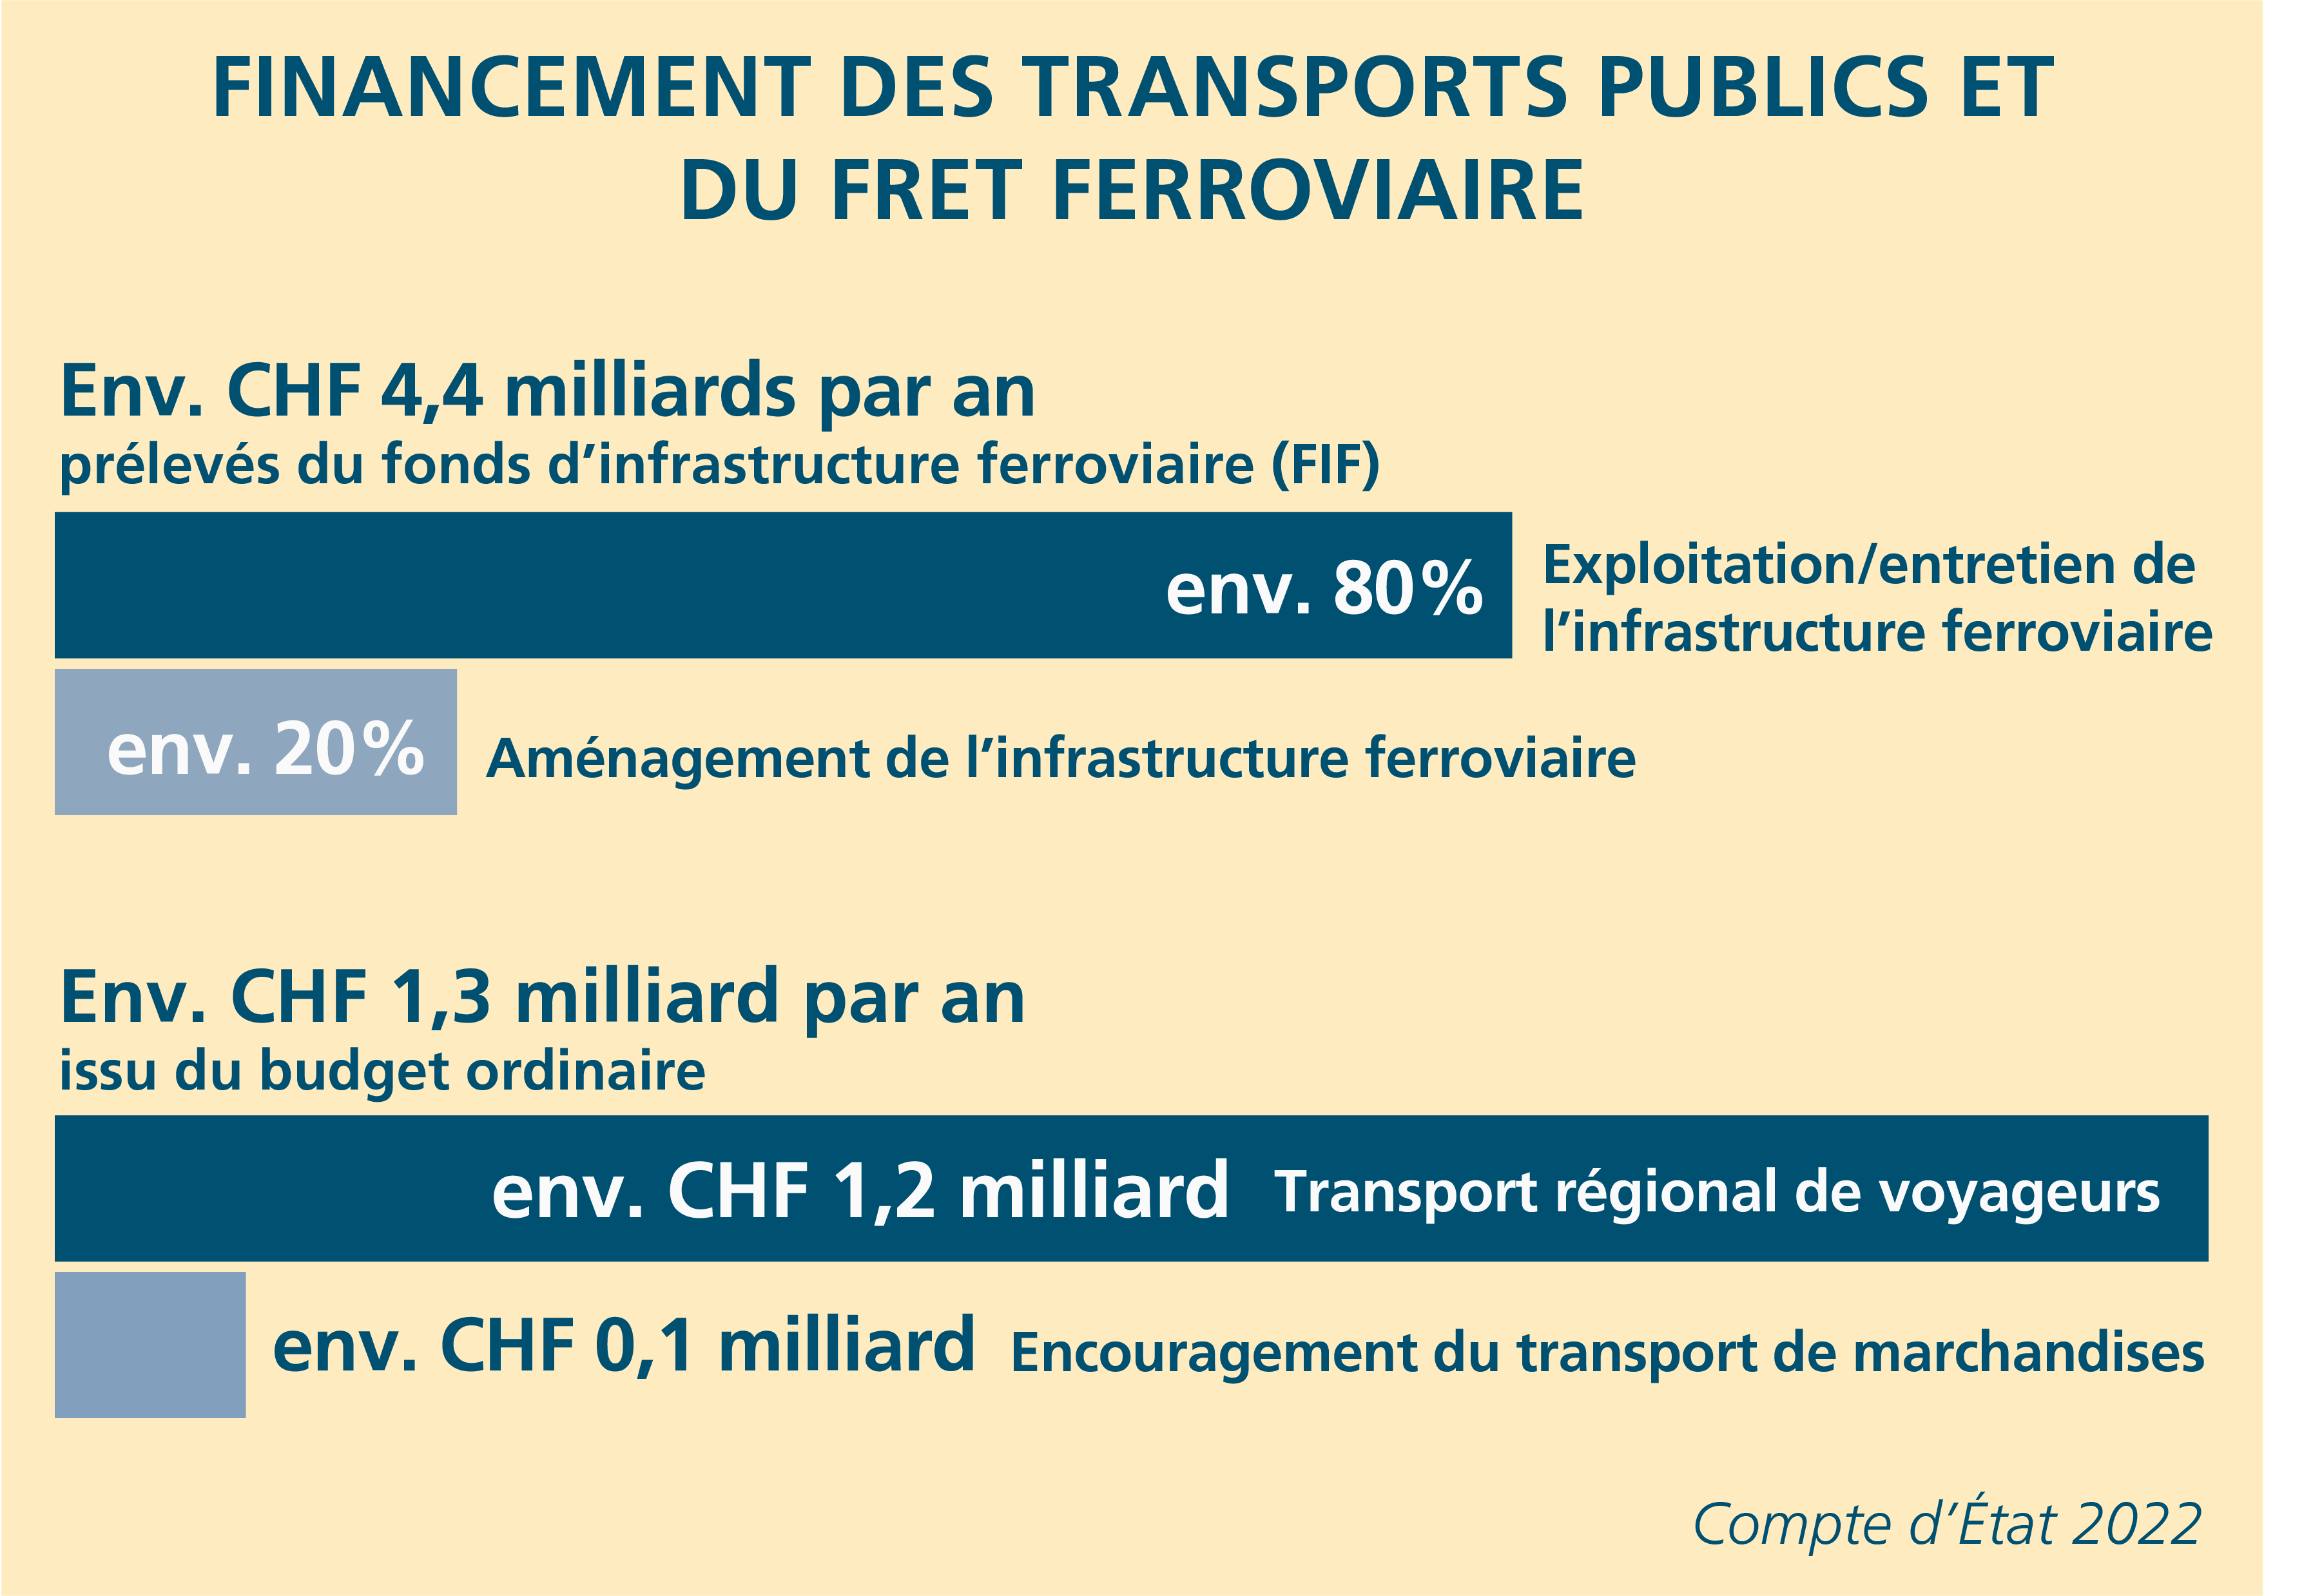 Financing of public transport